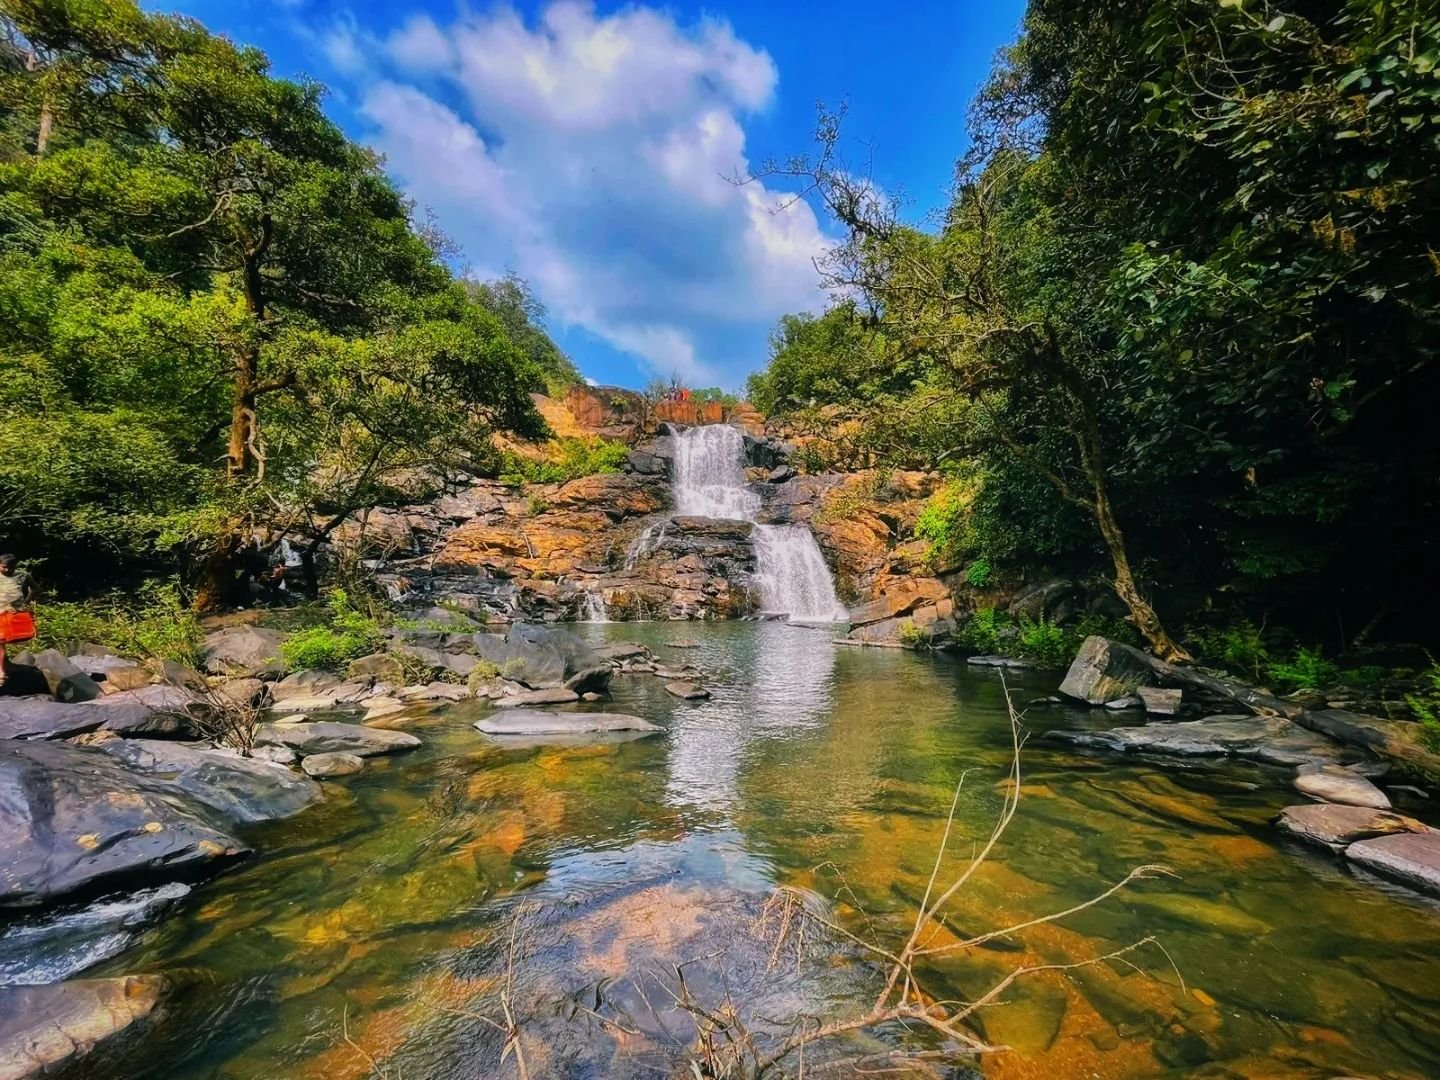 Belligundi Falls, Waterfalls in Udupi